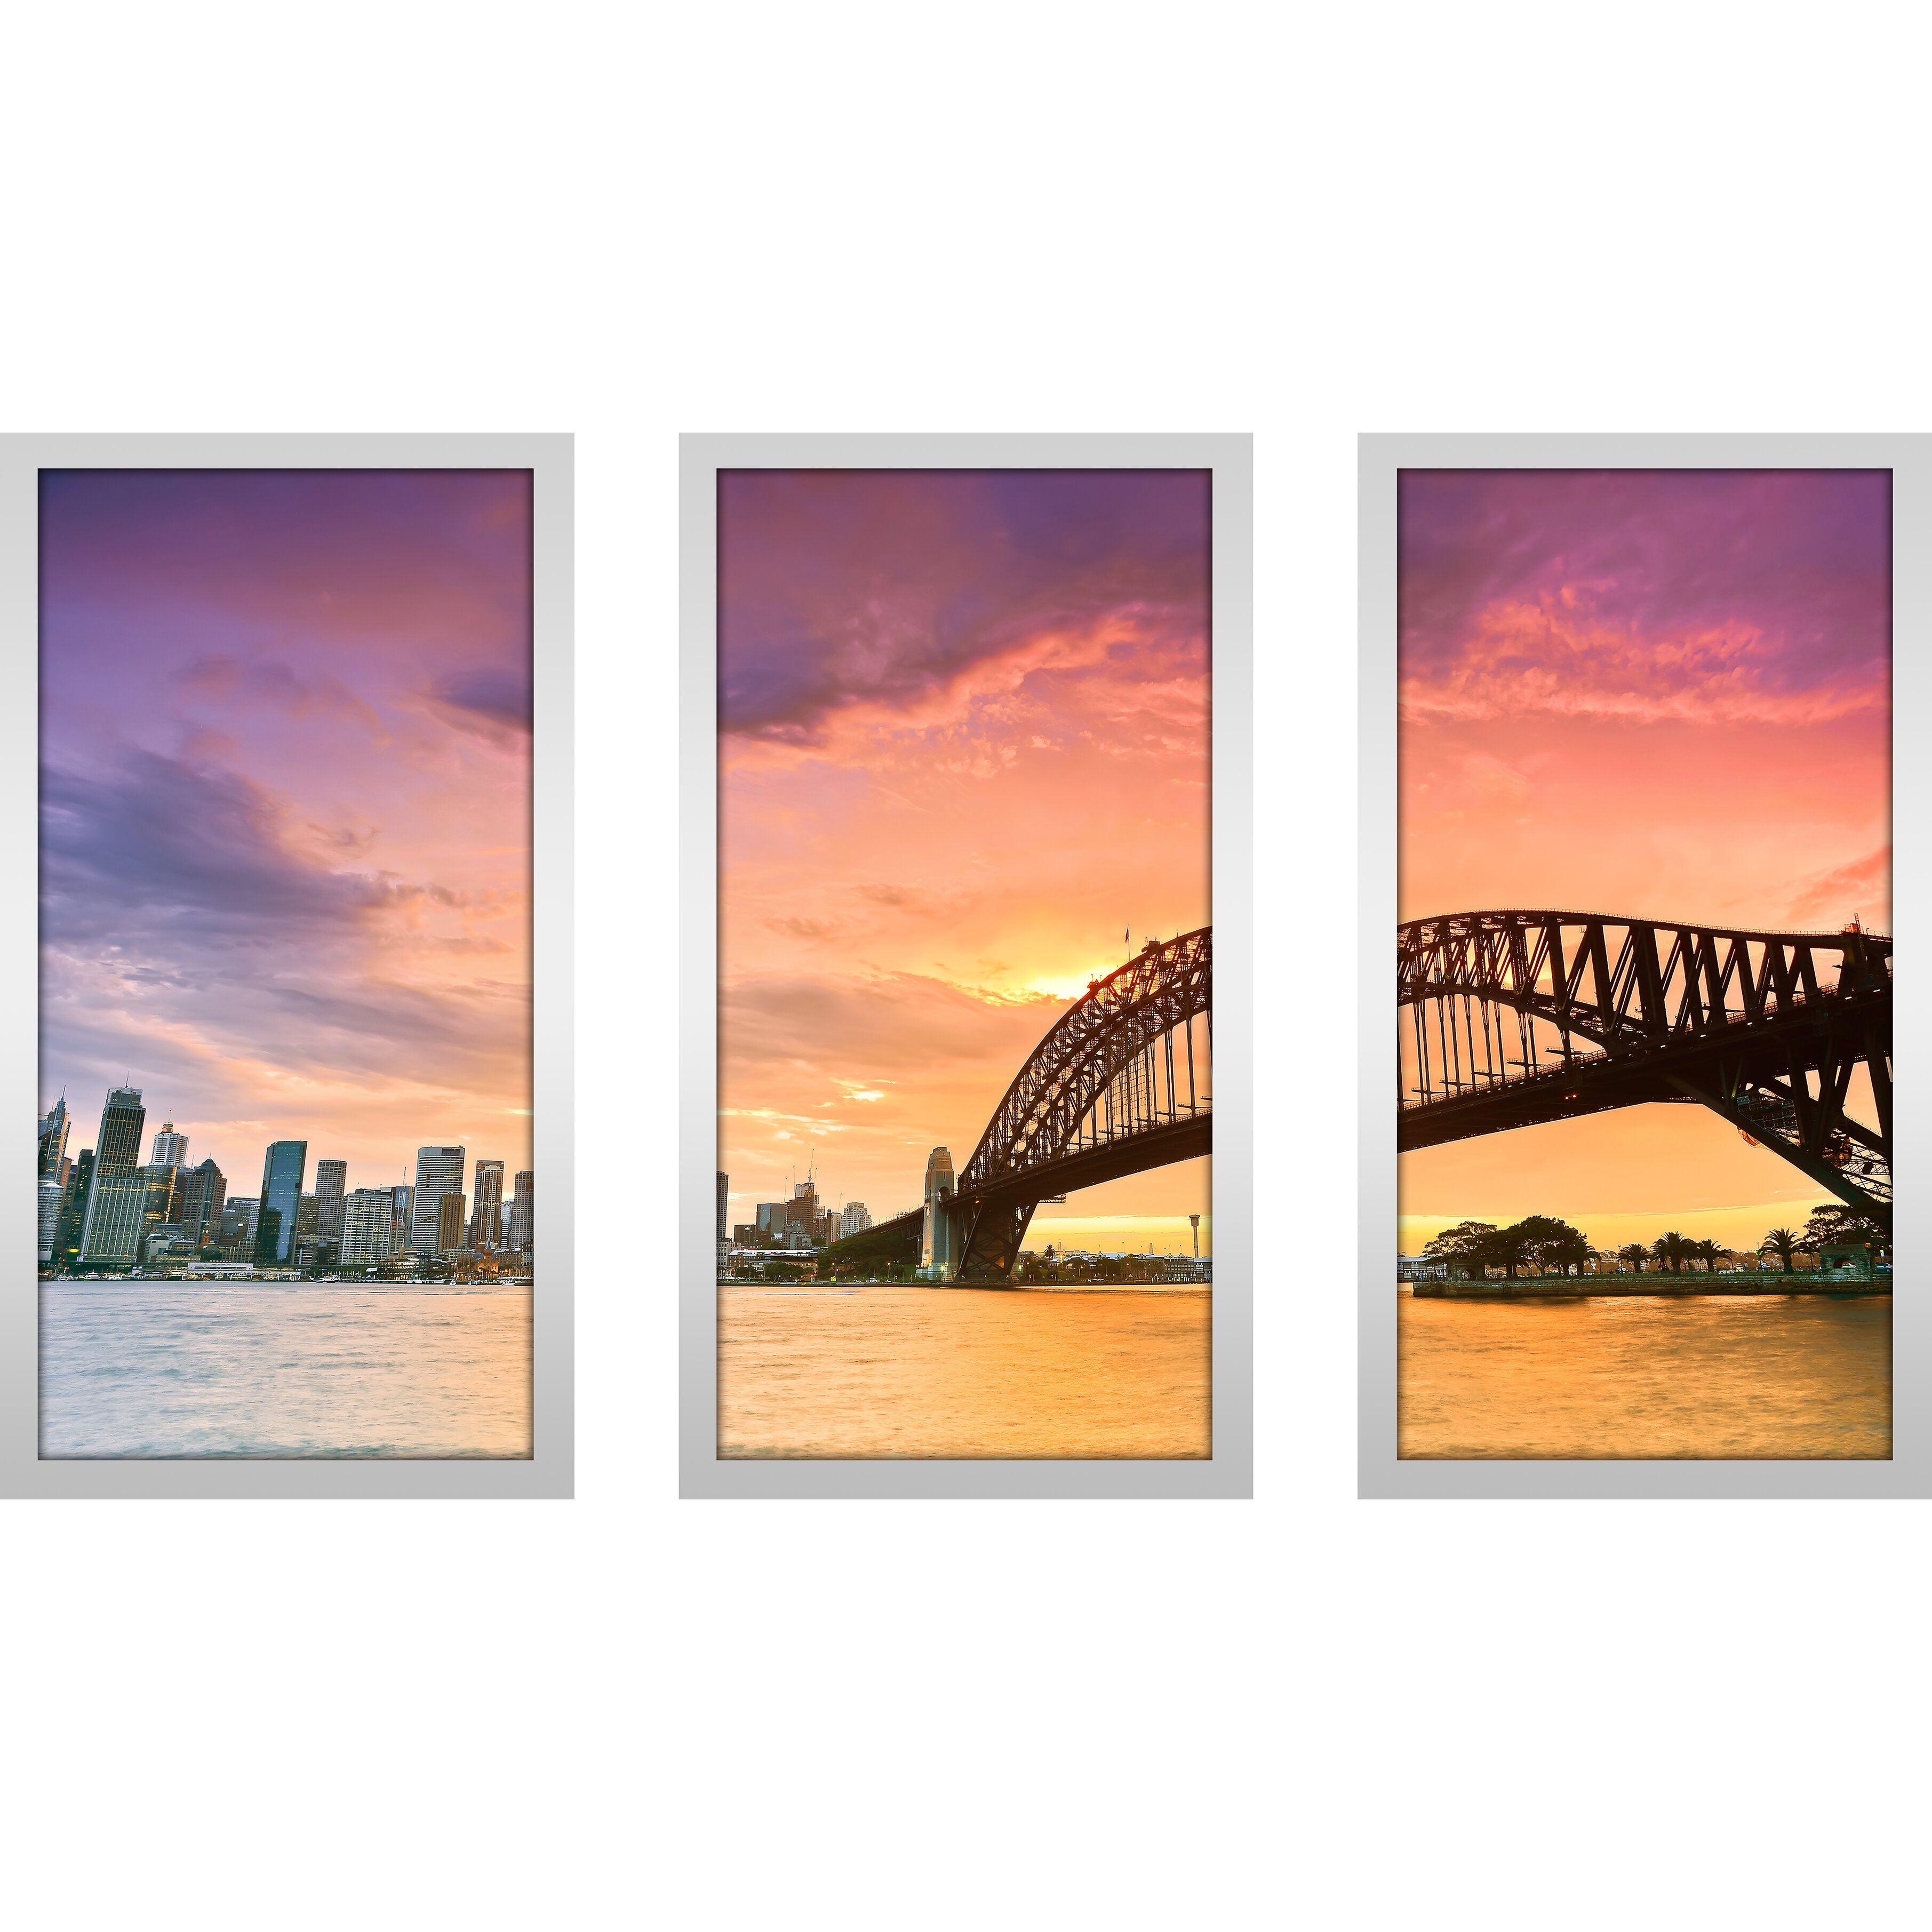 PicturePerfectInternational "Sydney" 3 Piece Framed ...